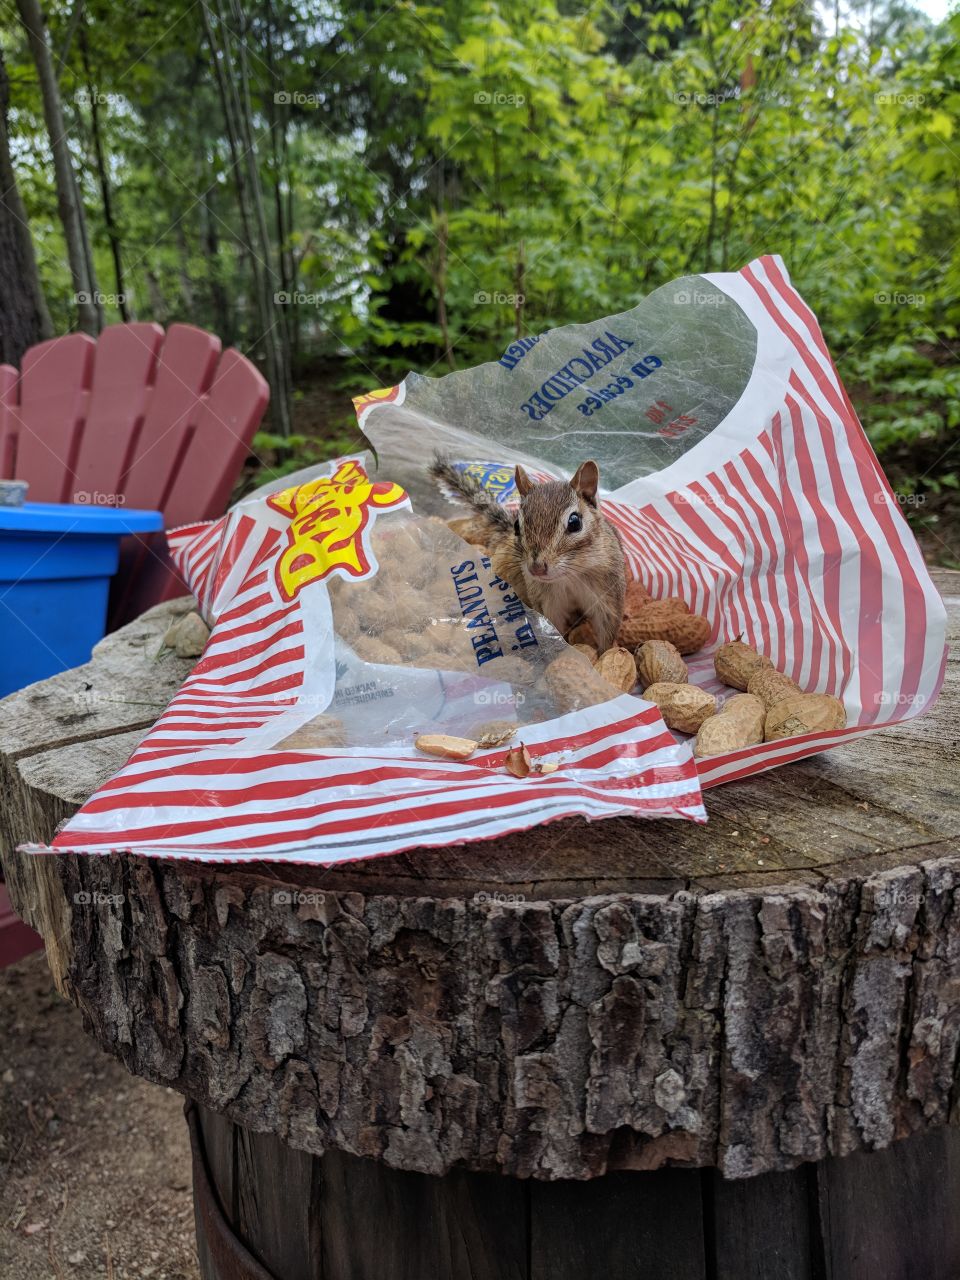 A chipmunk helping himself to peanuts.